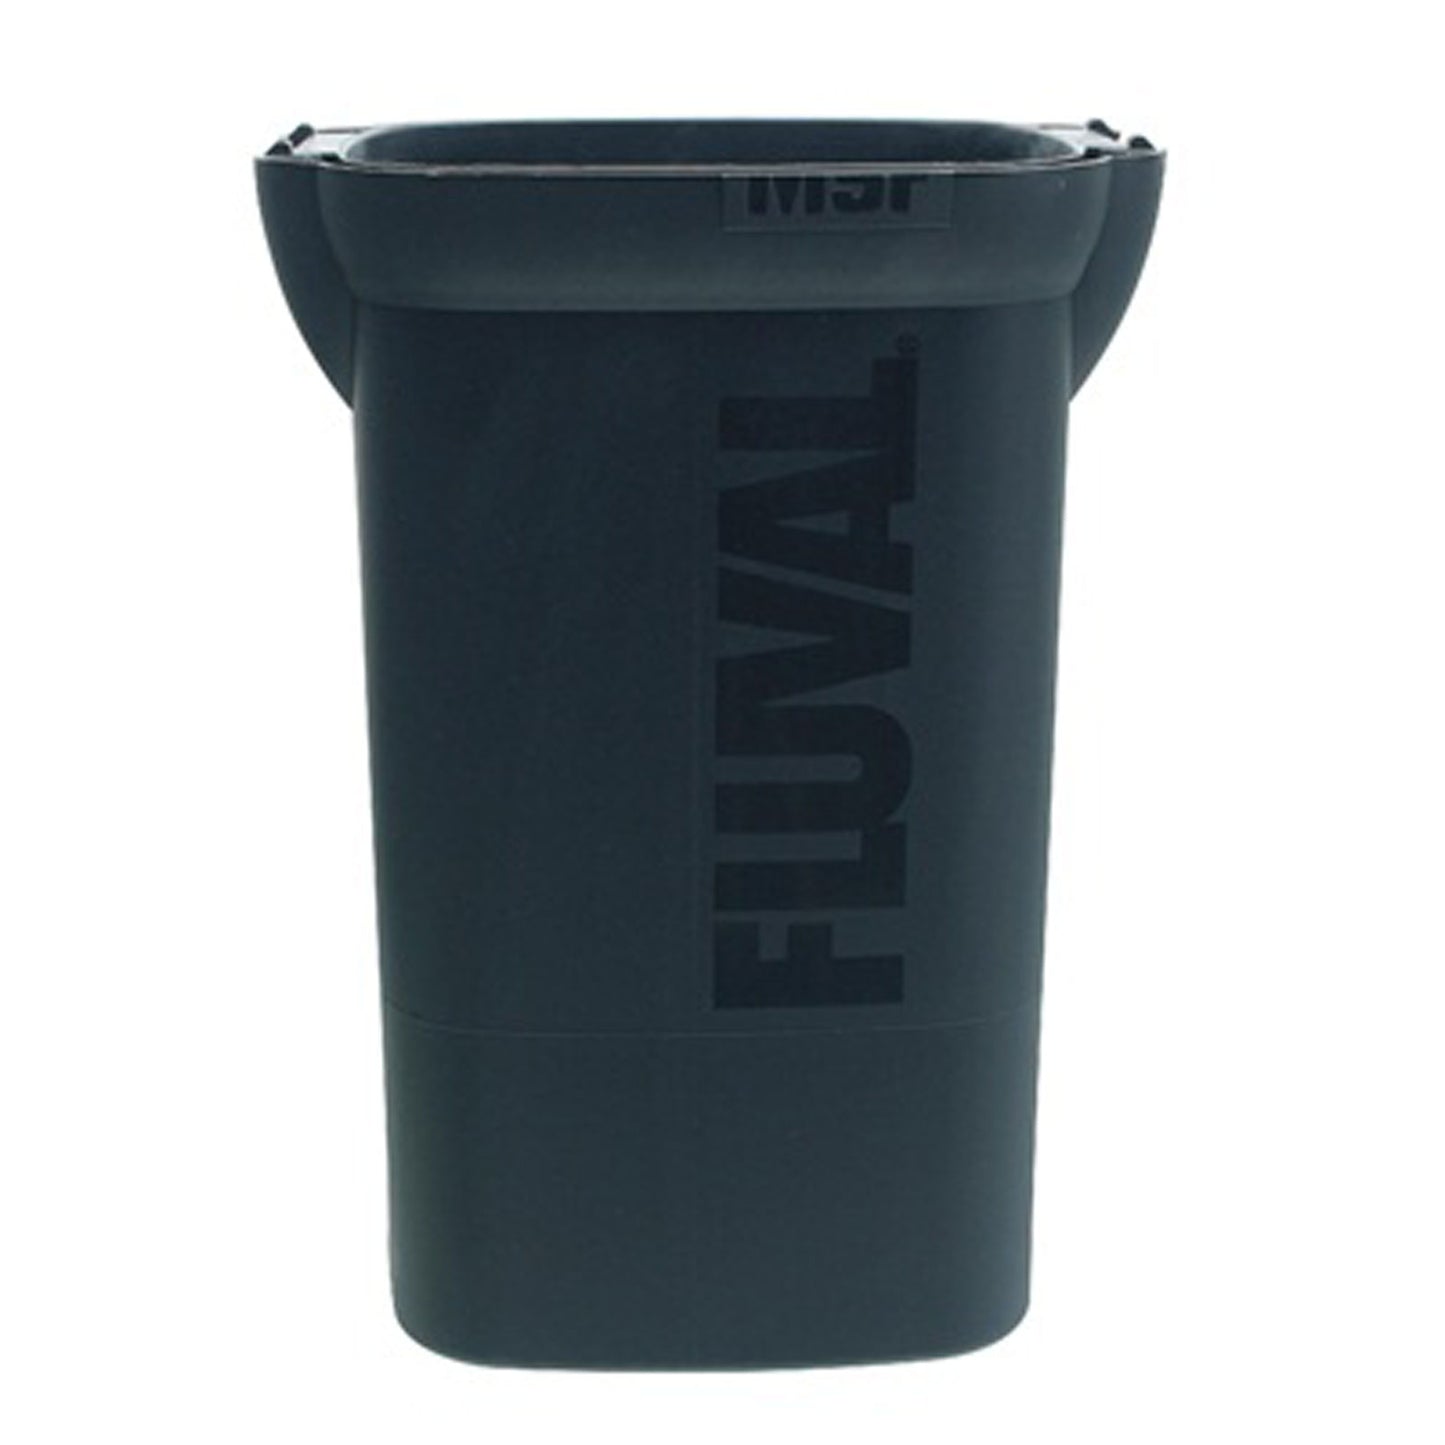 Fluval 205 206 Black Filter Case